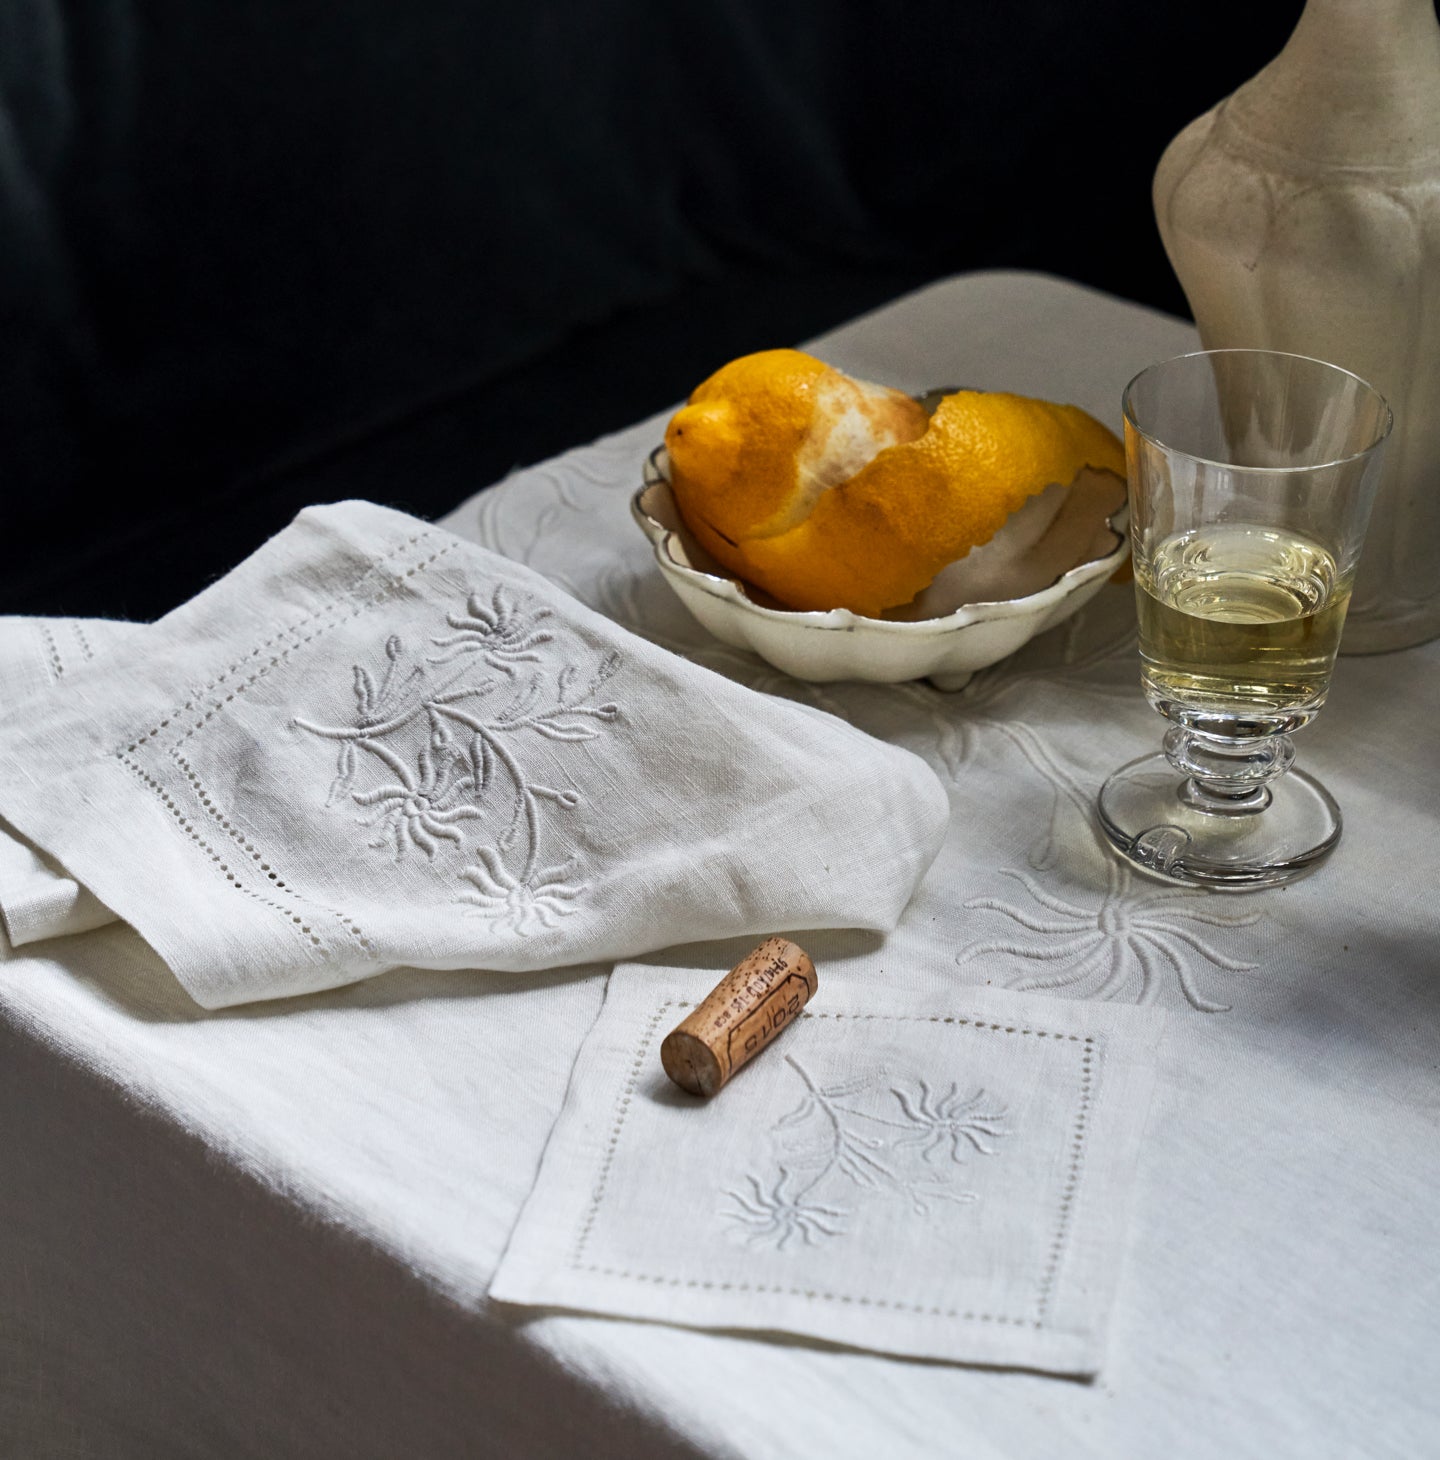 Embroidered Napkin in white linen